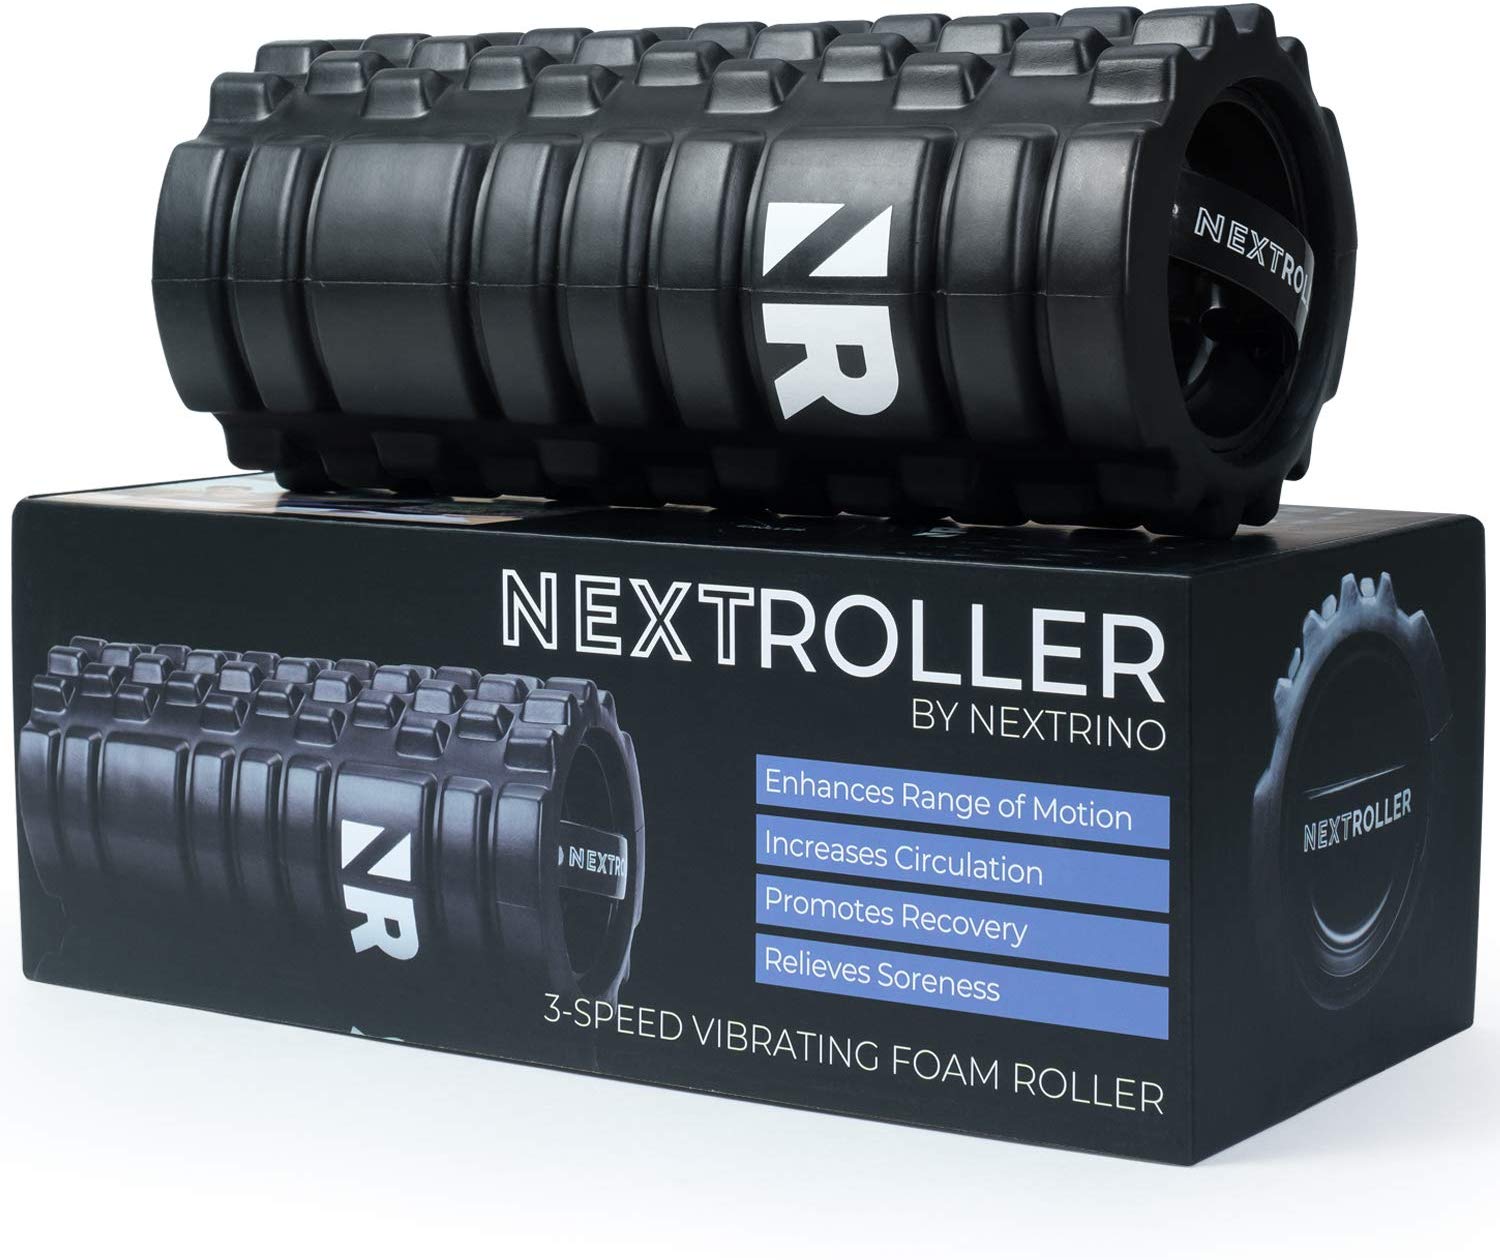 Review of NextRoller 3-Speed Vibrating Foam Roller